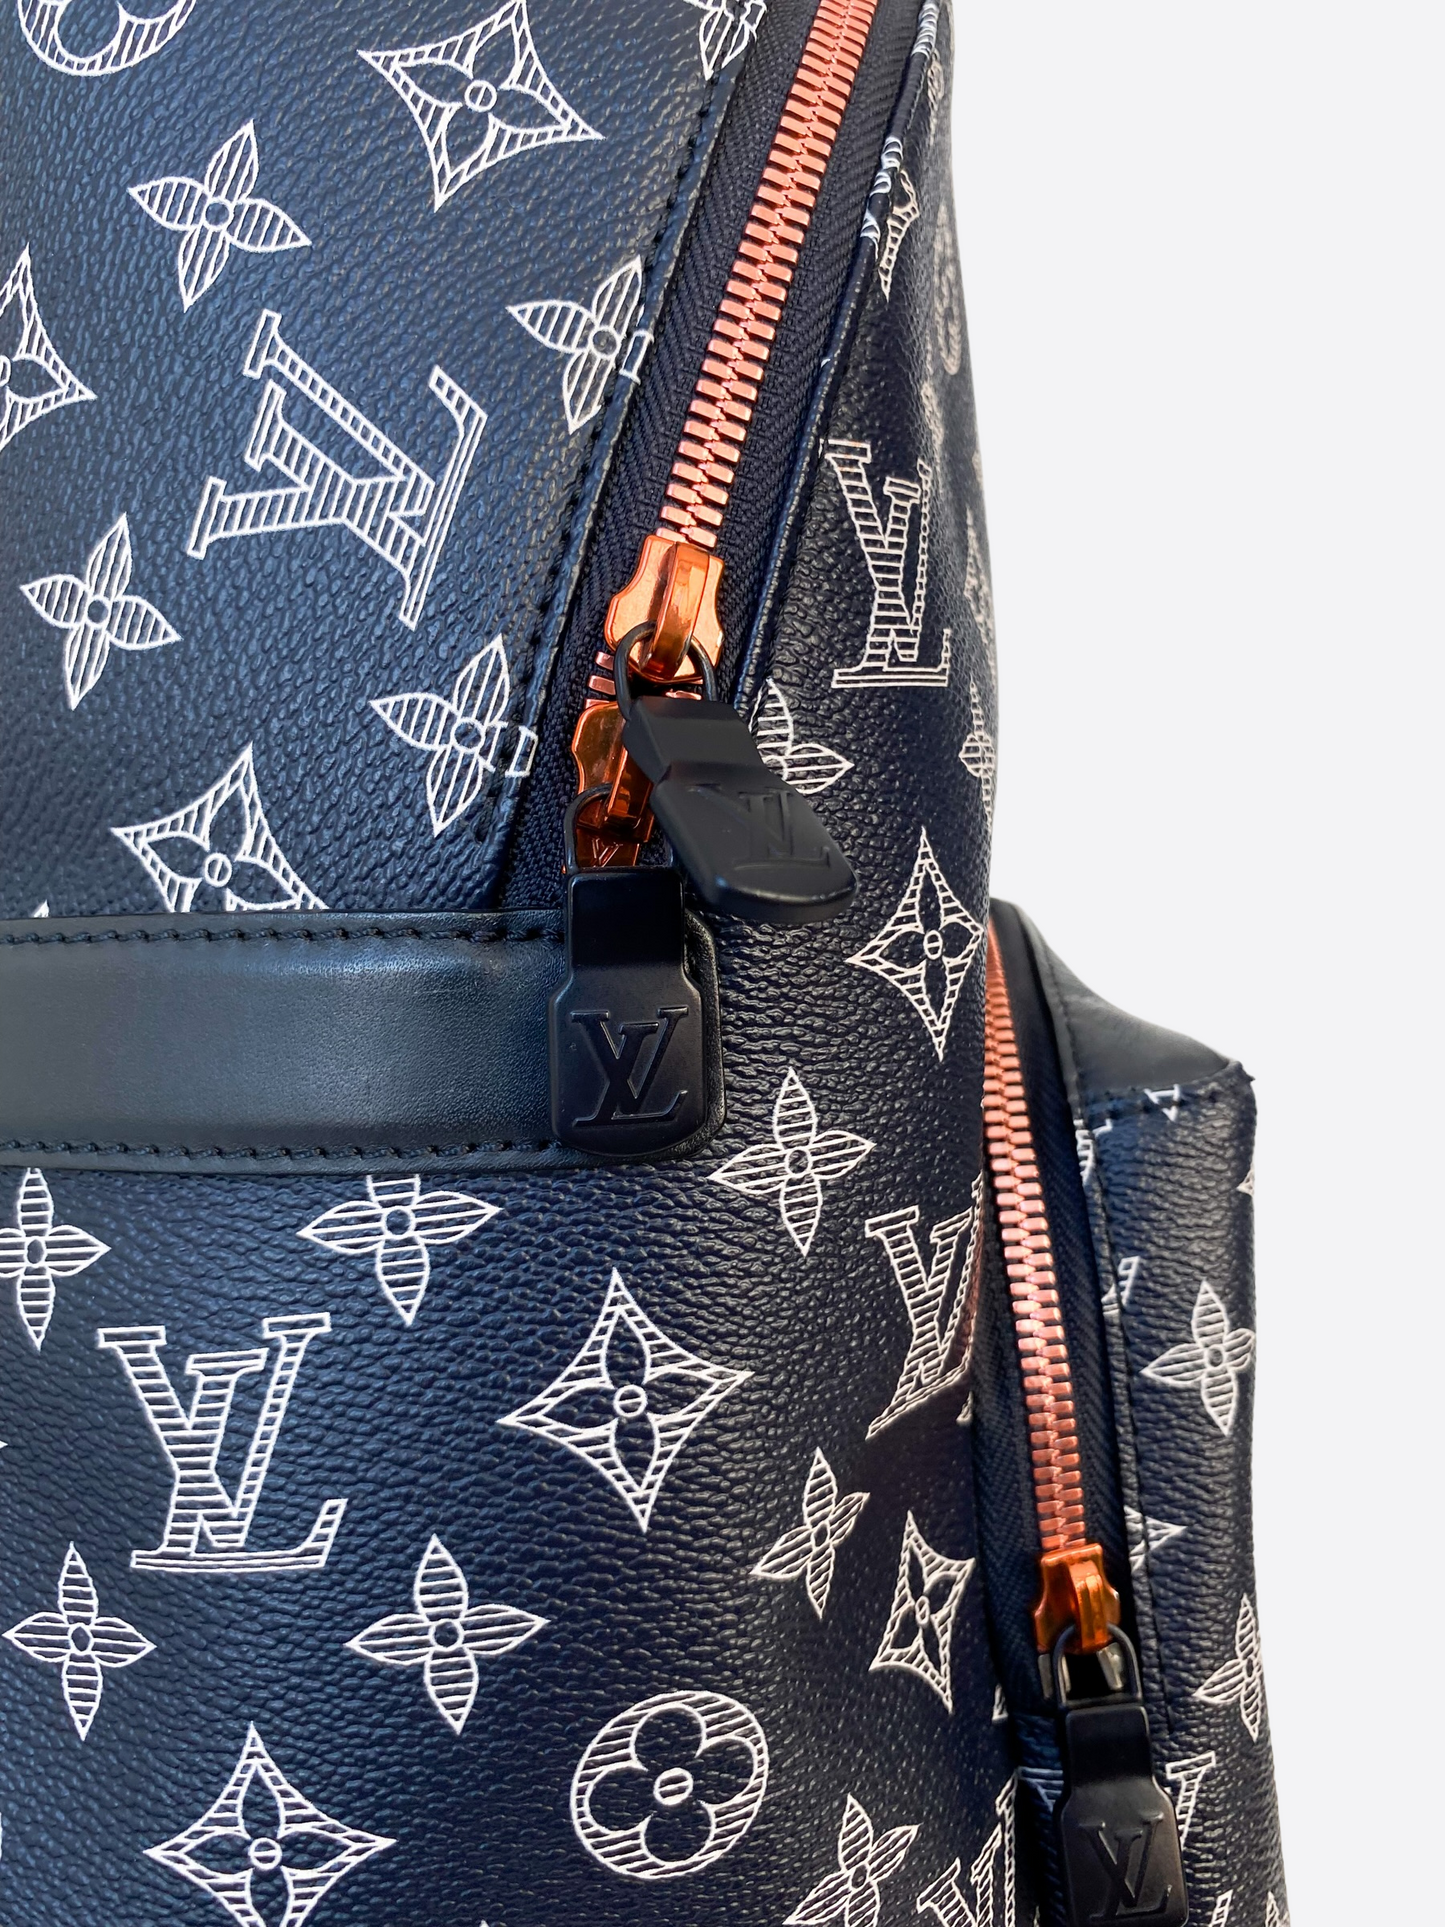 Louis Vuitton Monogram Upside Down Apollo Backpack Louis Vuitton